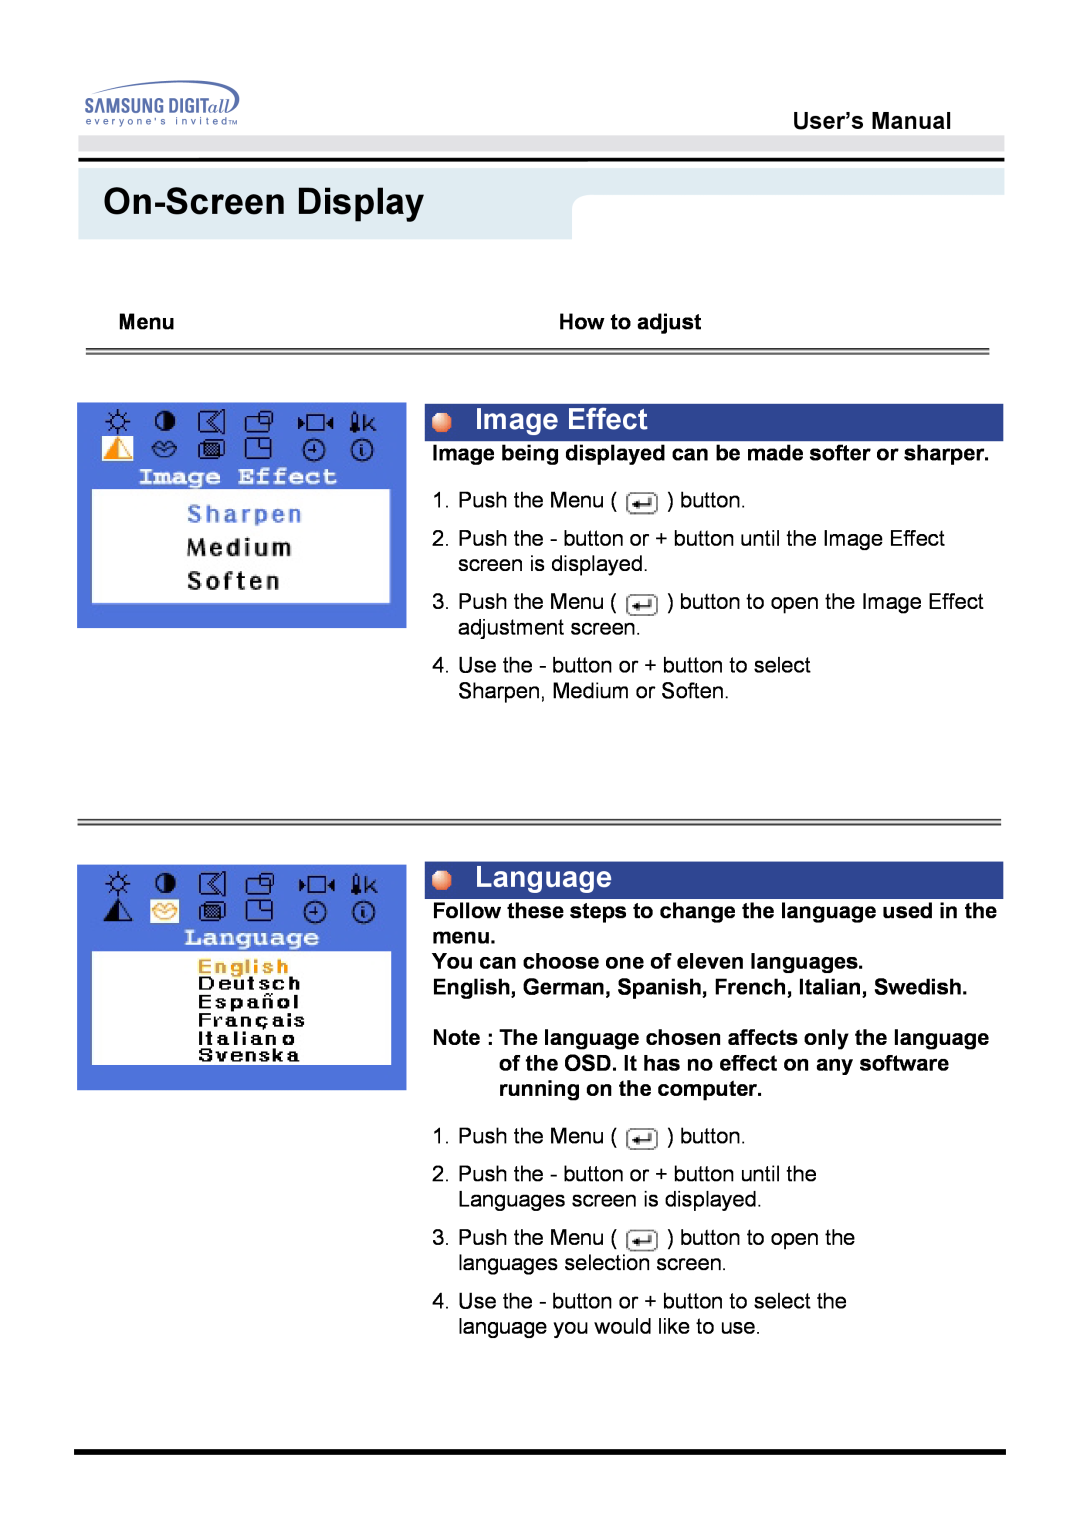 Samsung 760TFT manual On-Screen Display, Image Effect, Language, User’s Manual, Menu, How to adjust 